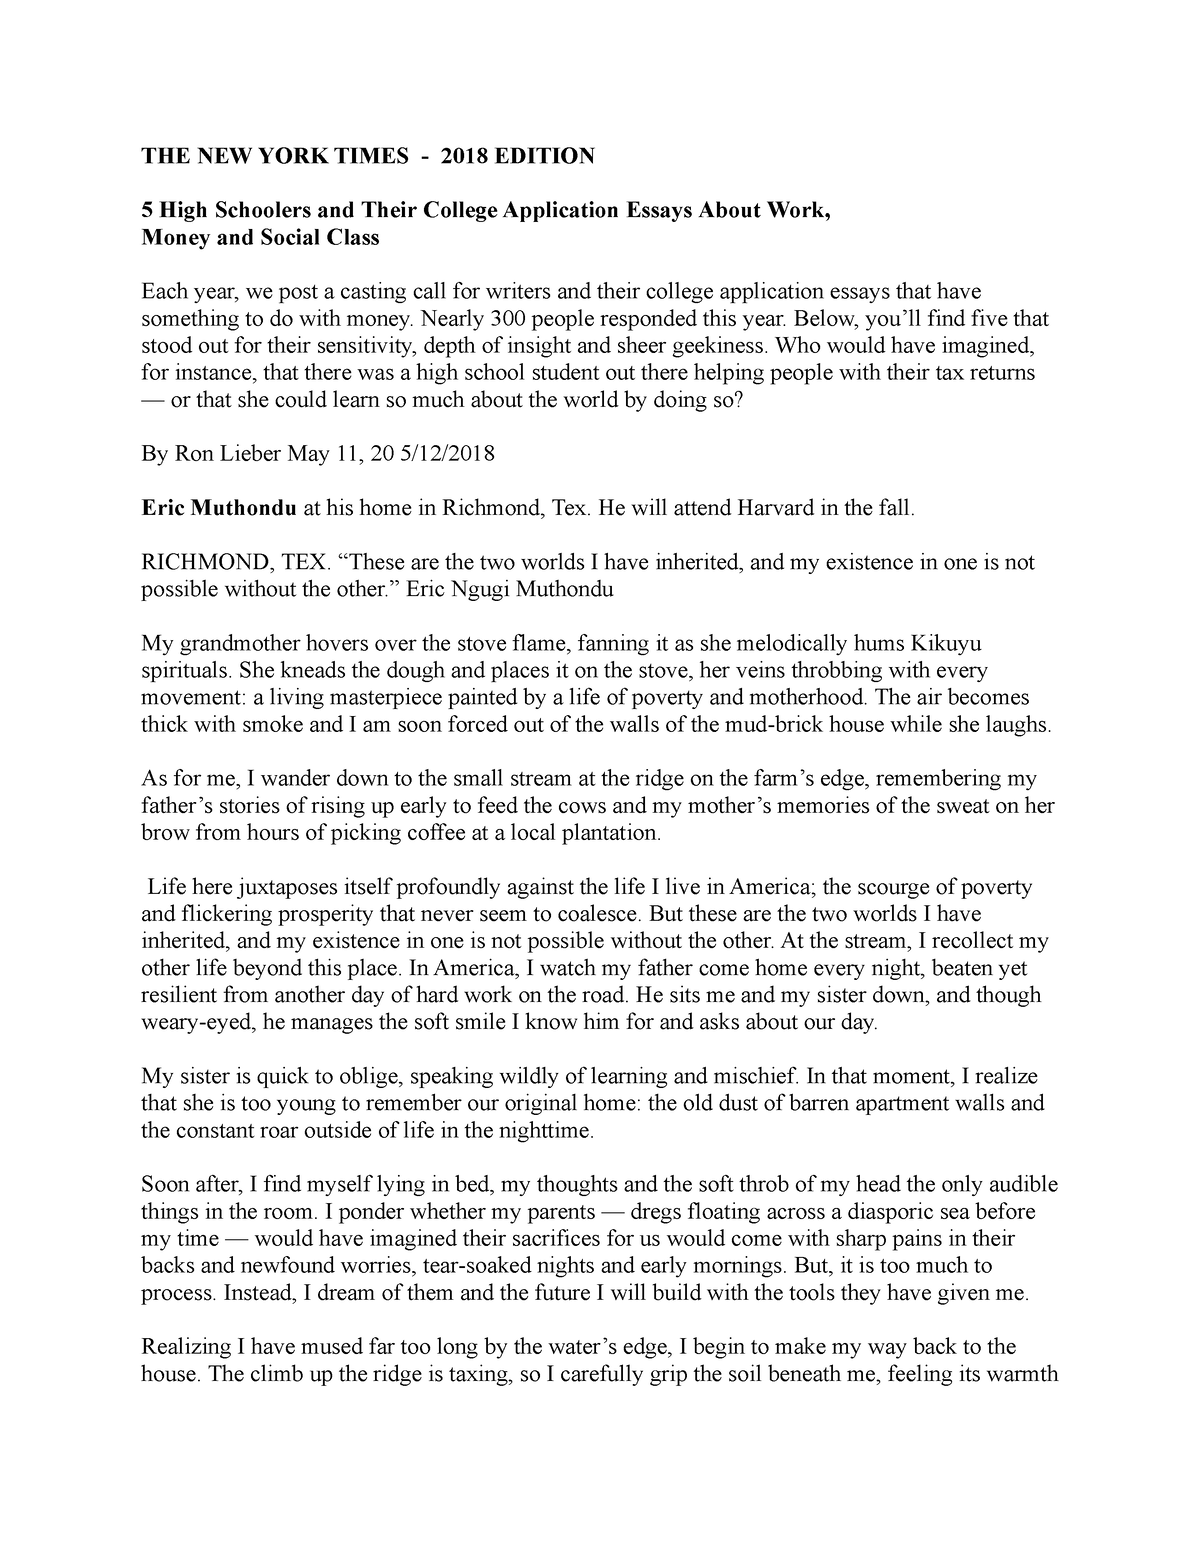 new york times student essays